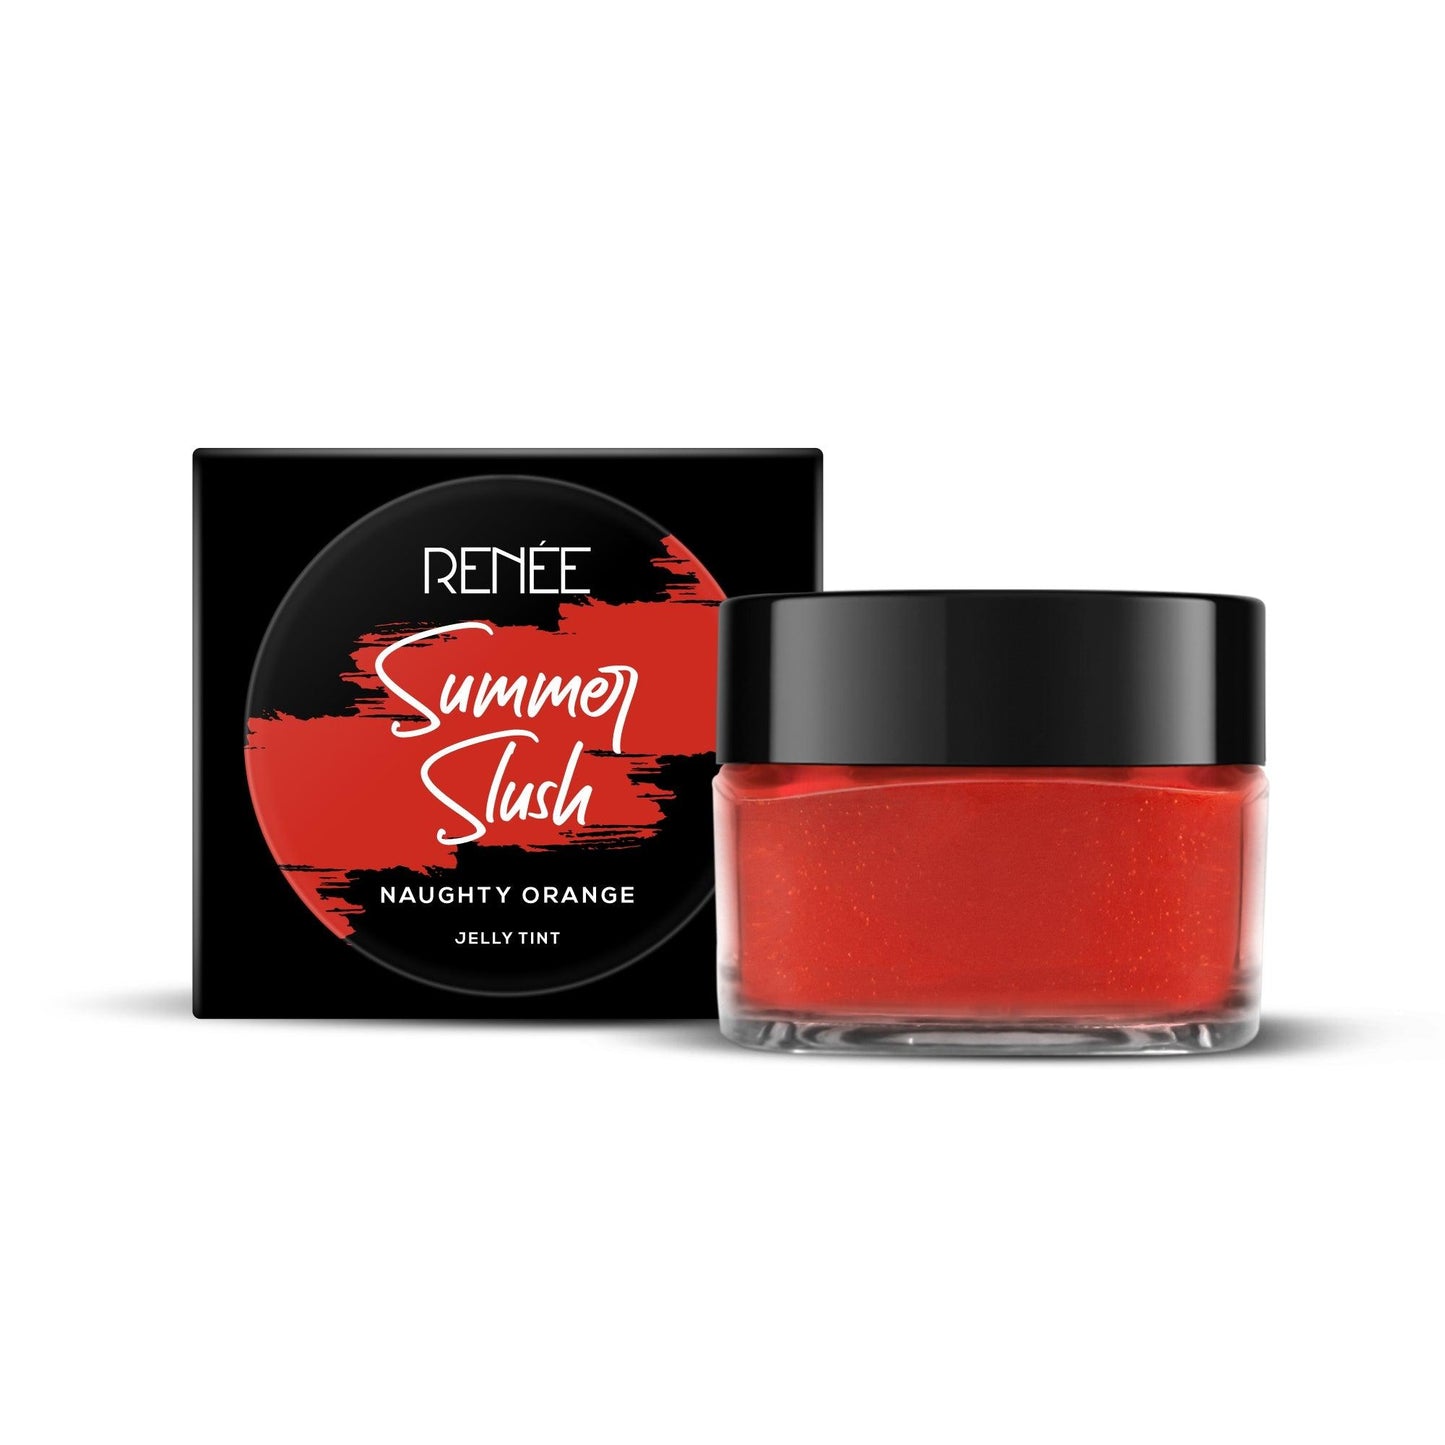 Renee Summer Slush Jelly Tint 13gm - Naughty Orange